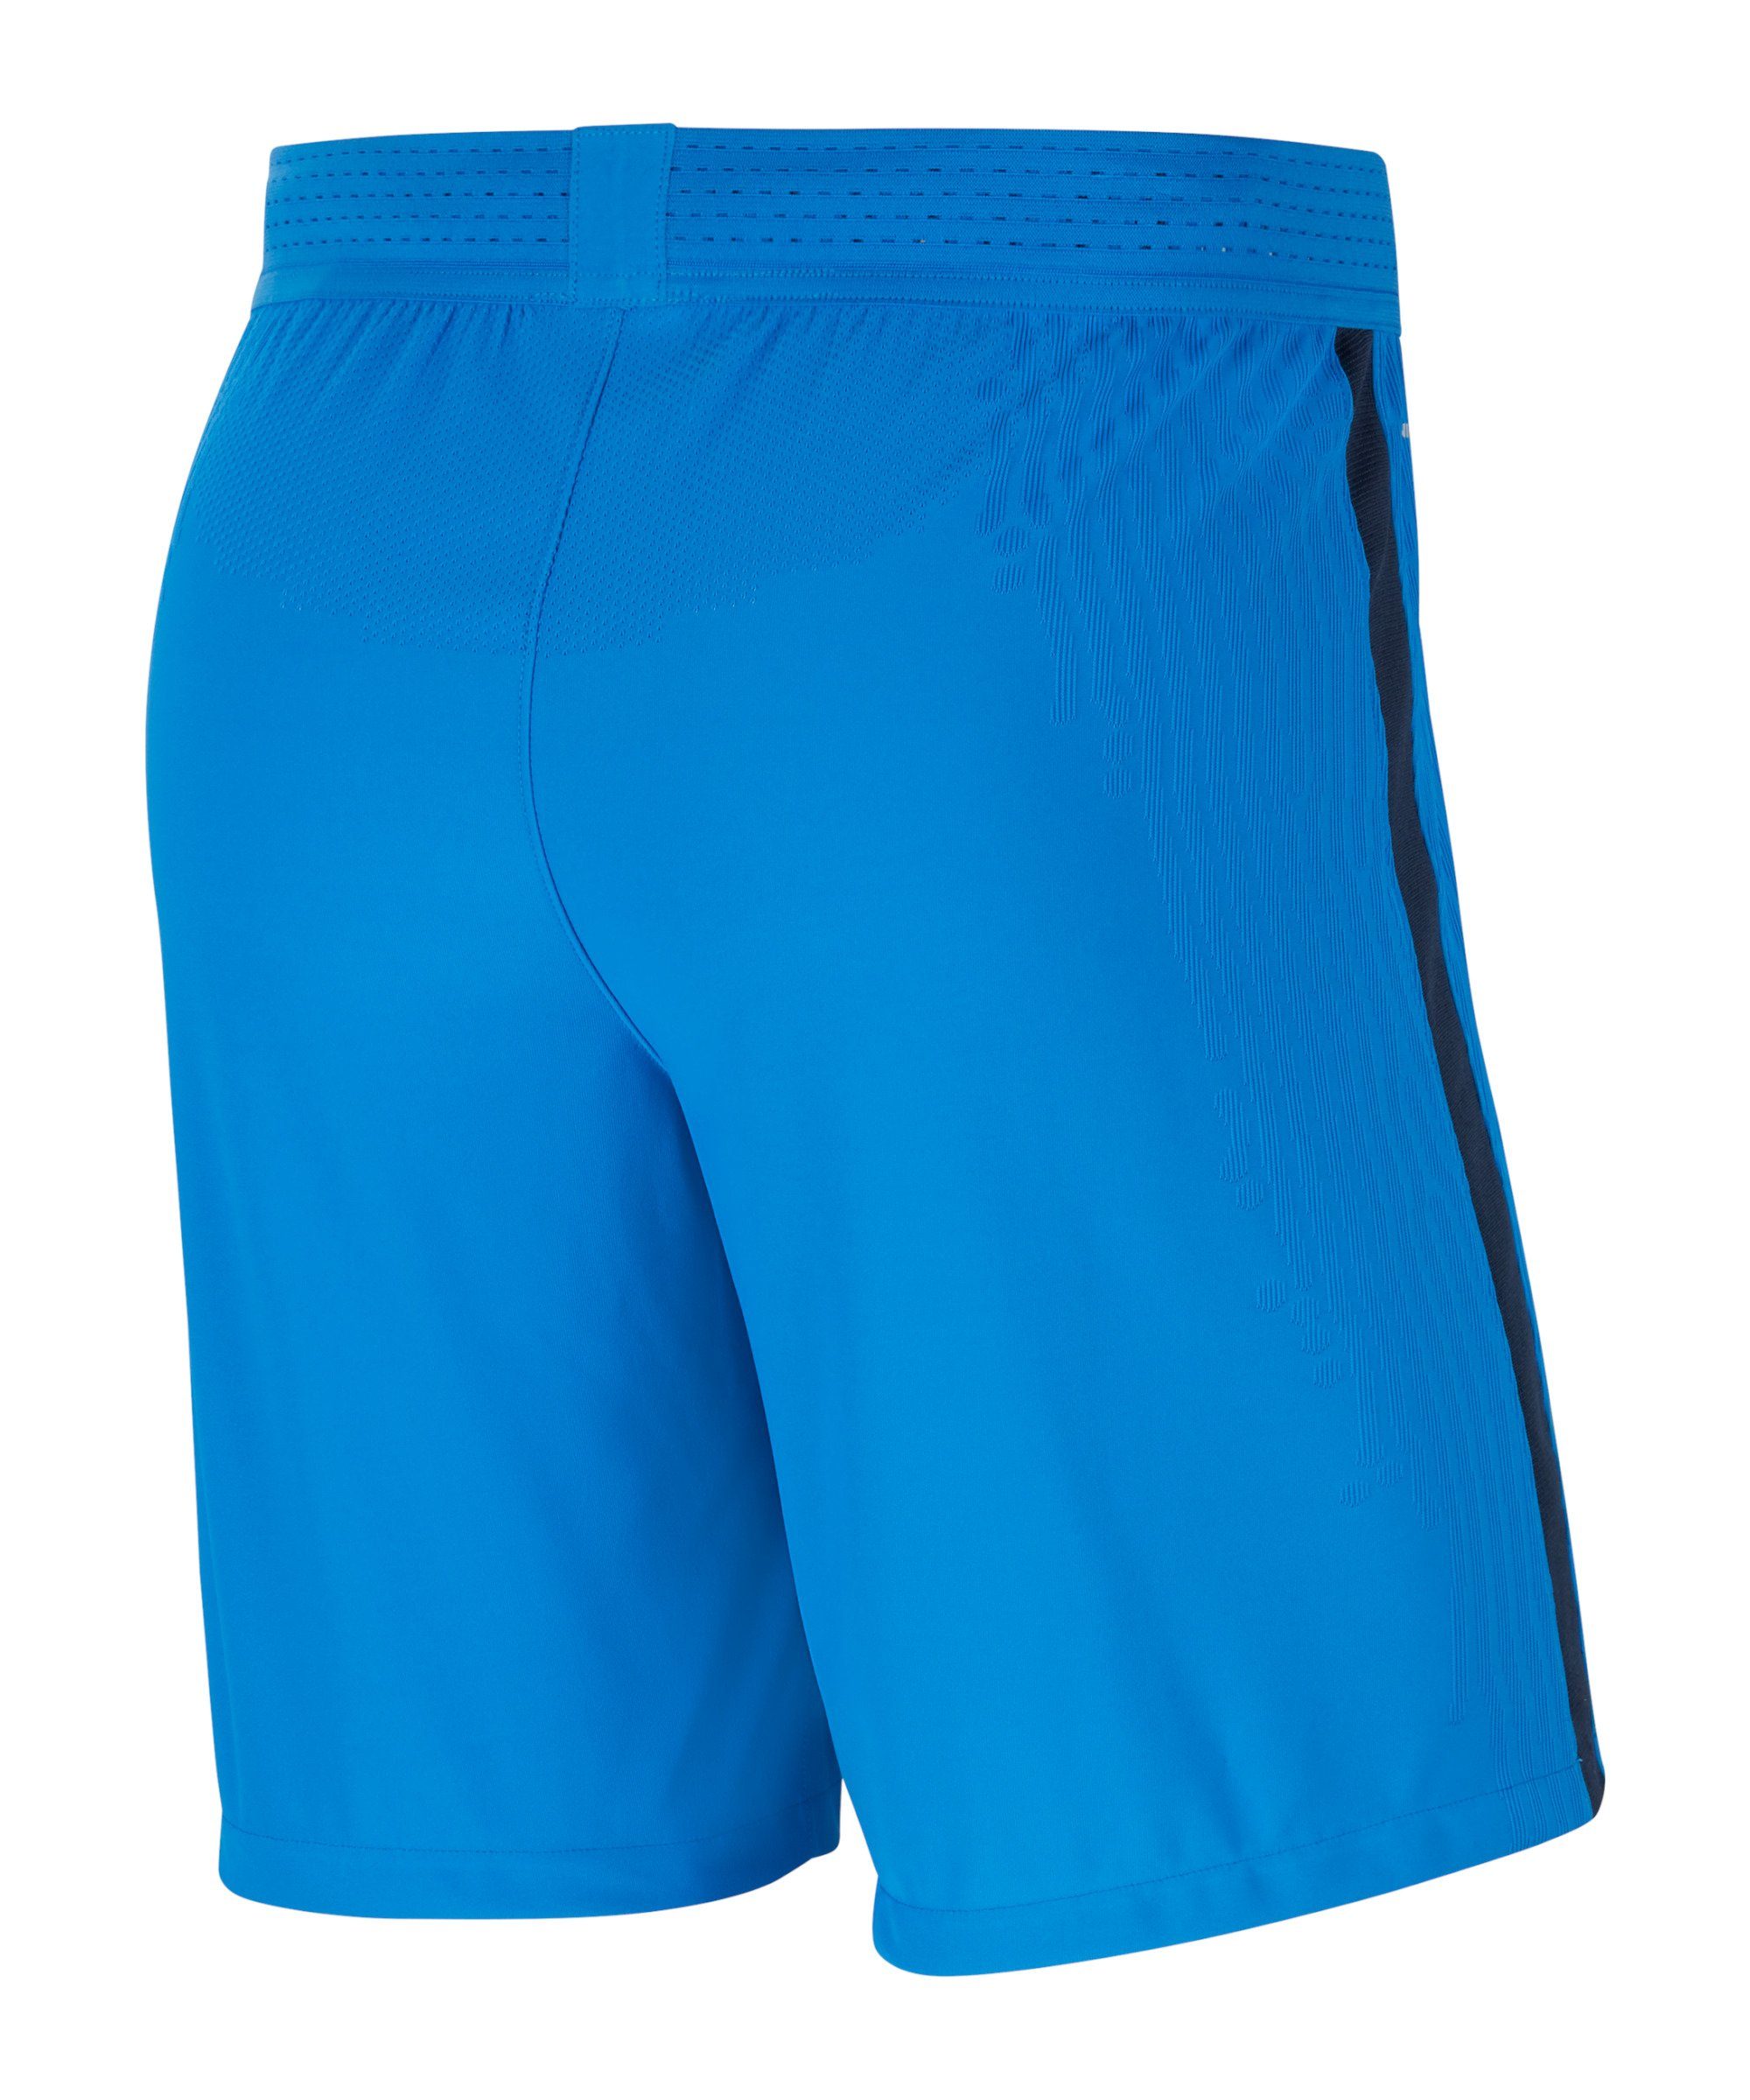 III Nike Short Knit blauweiss Vapor Sporthose